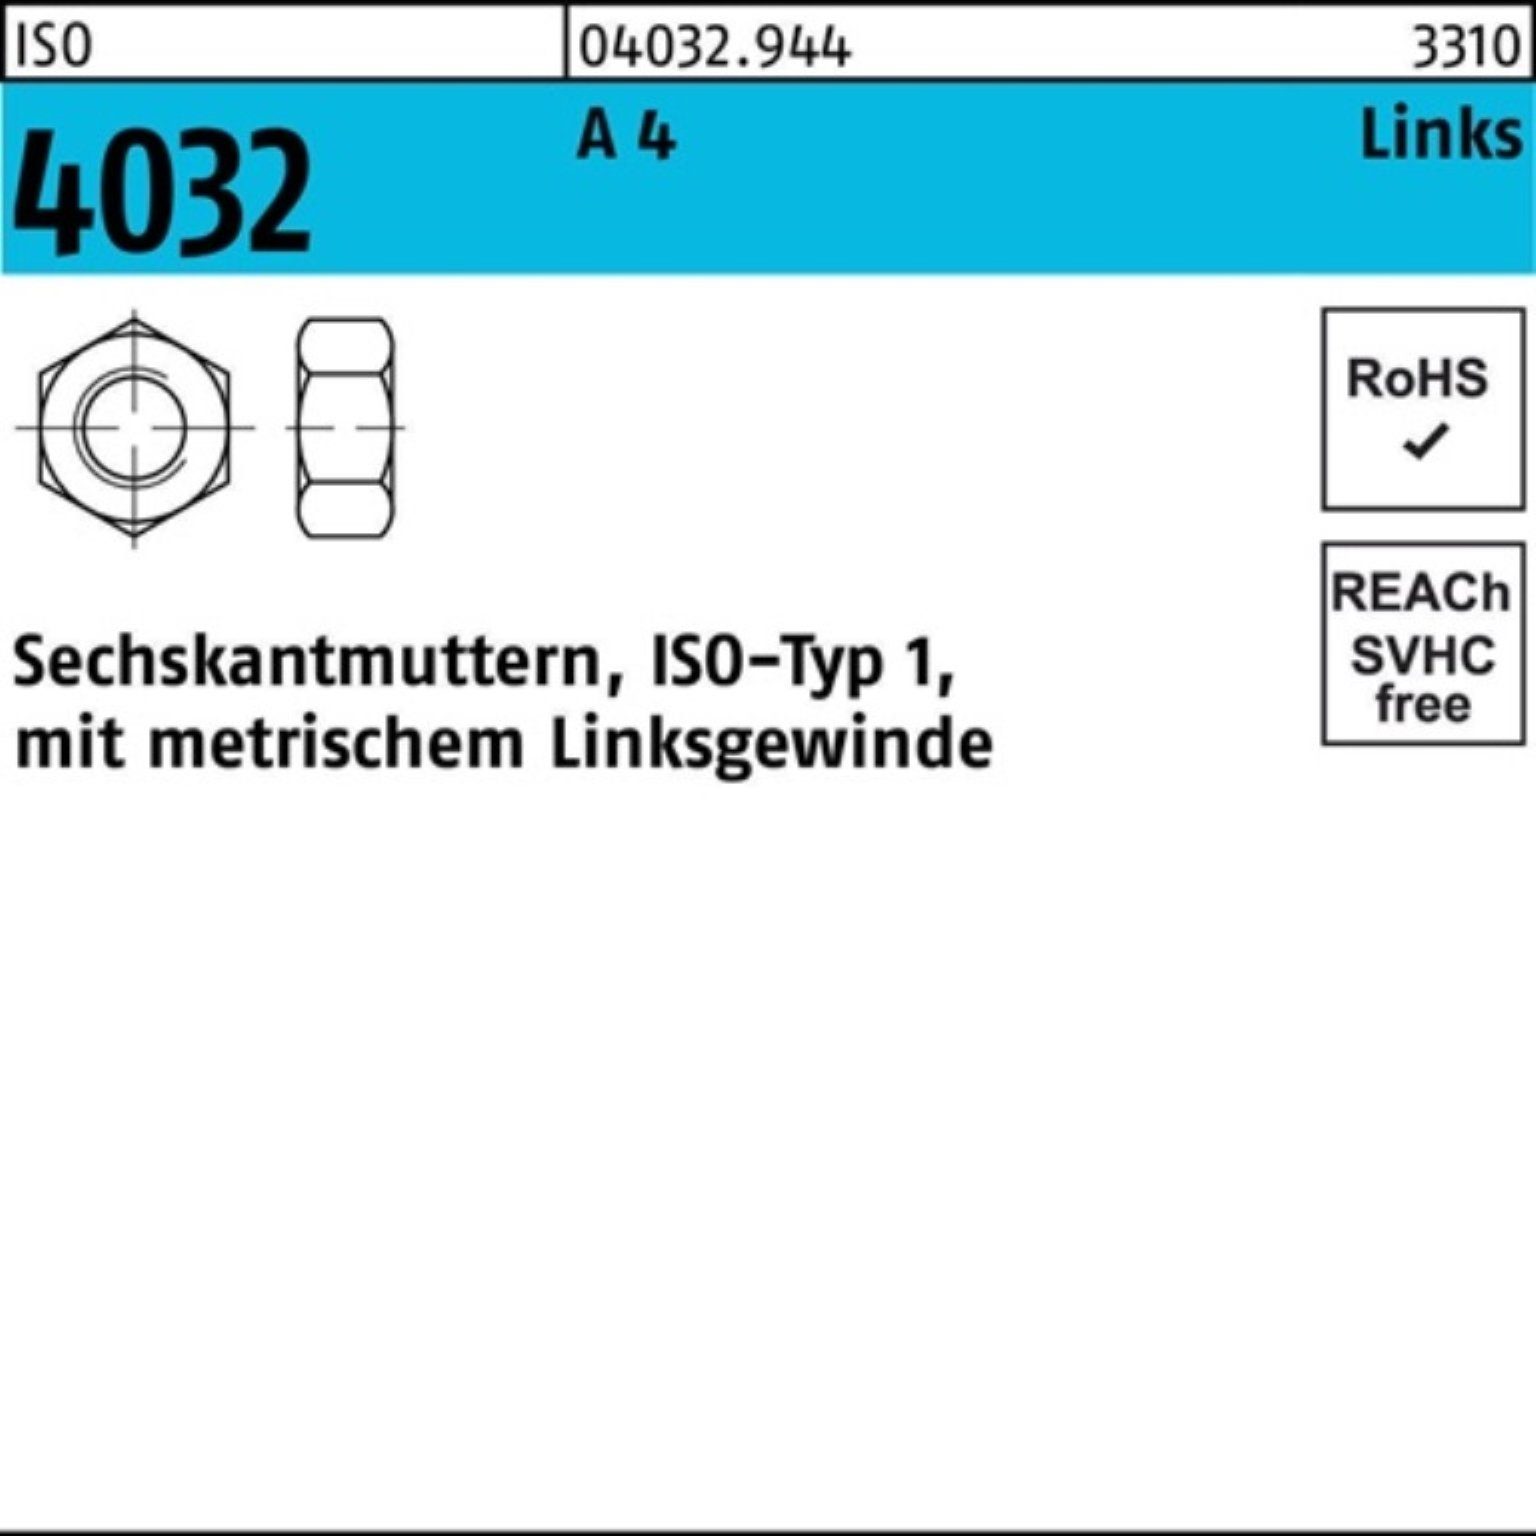 Bufab Muttern 100er M8 ISO - Sechskantmutter Stück 4 100 links 70 A 4 ISO 4032 Pack